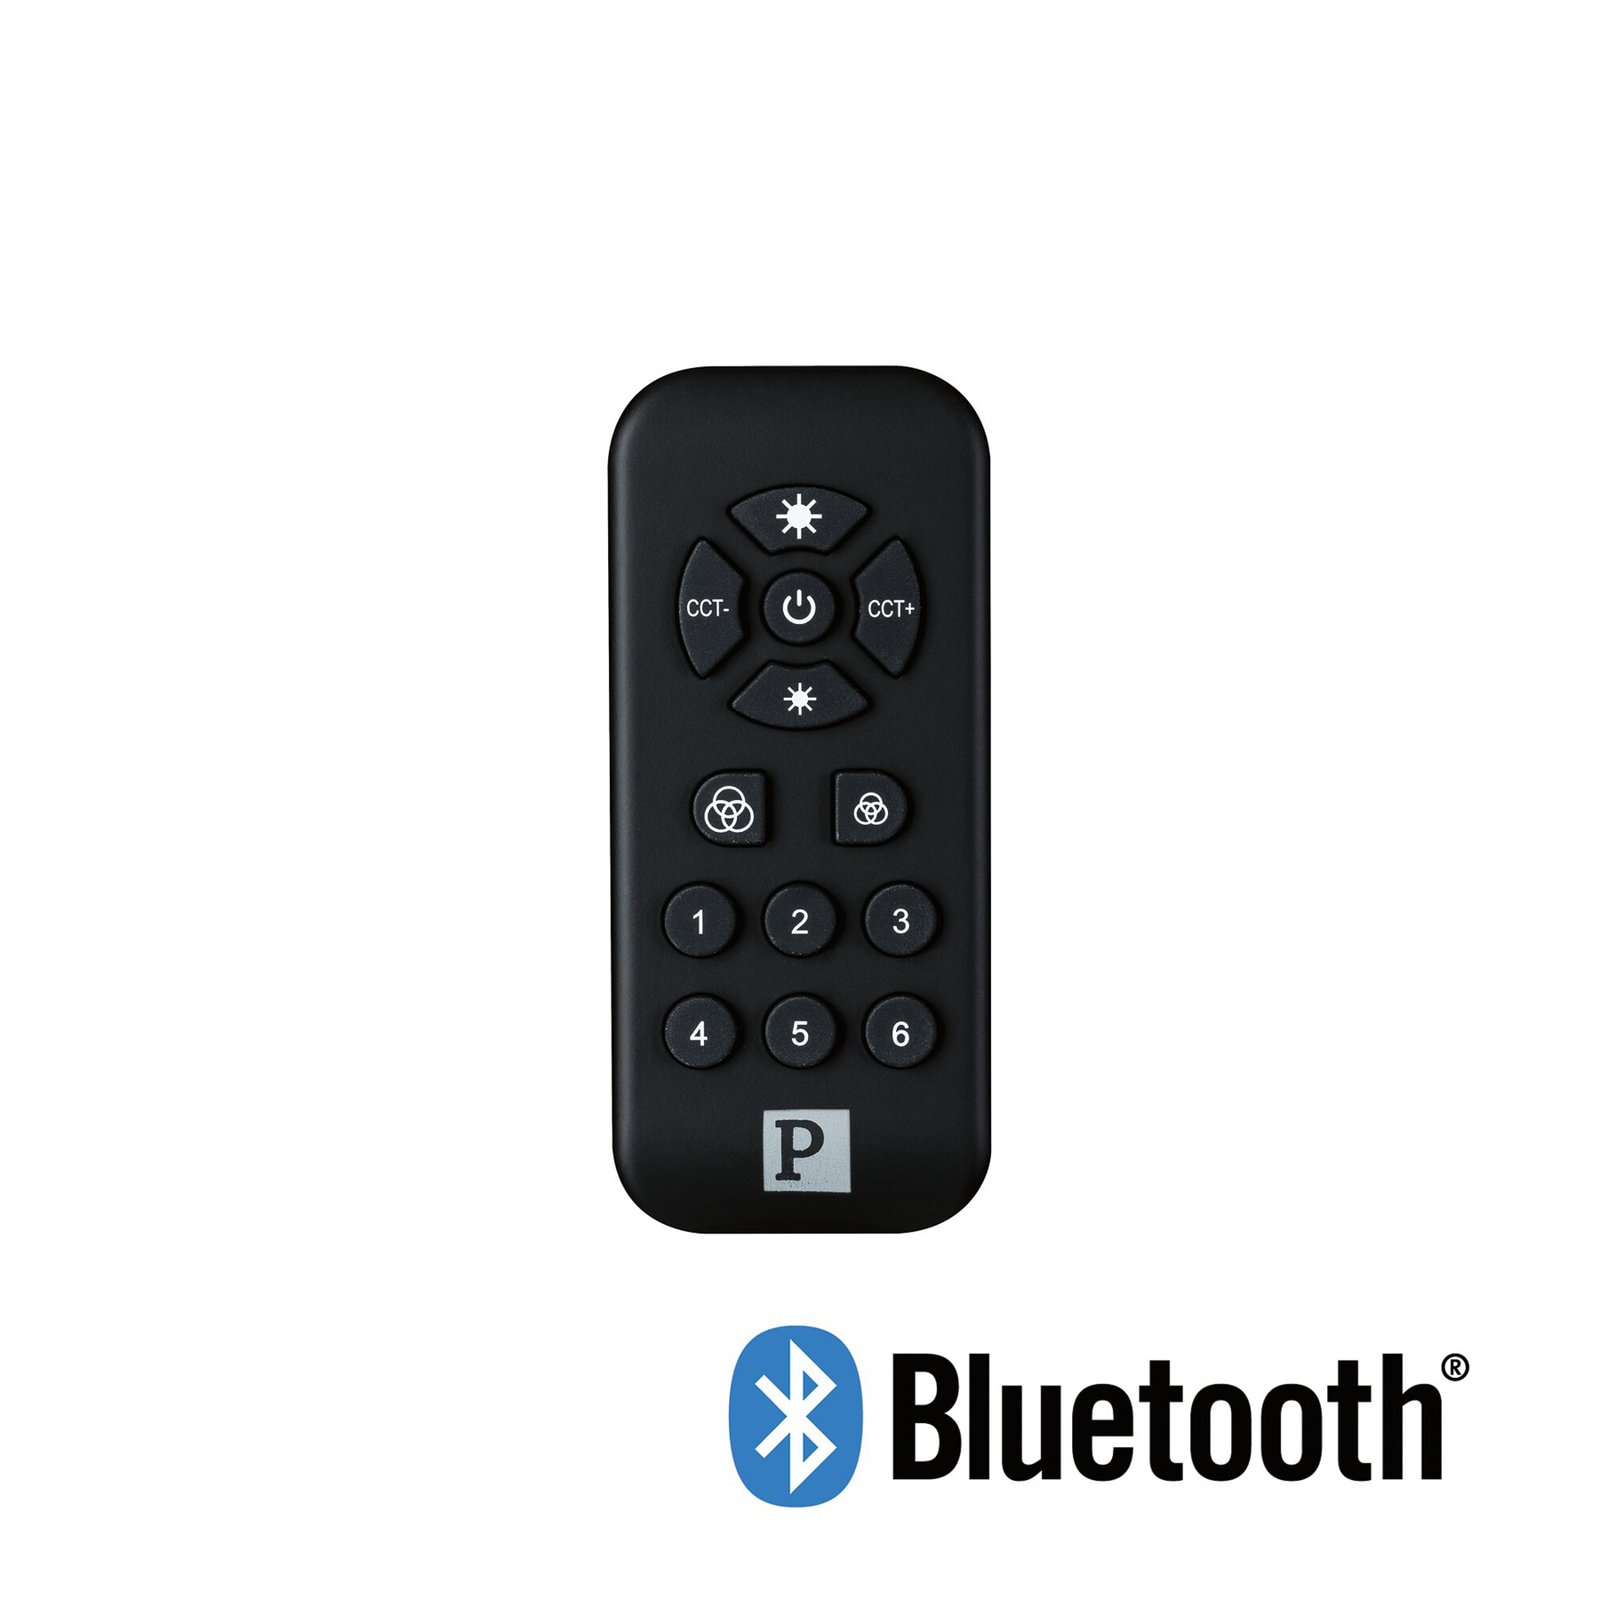 Paulmann Bluetooth Boss remote control